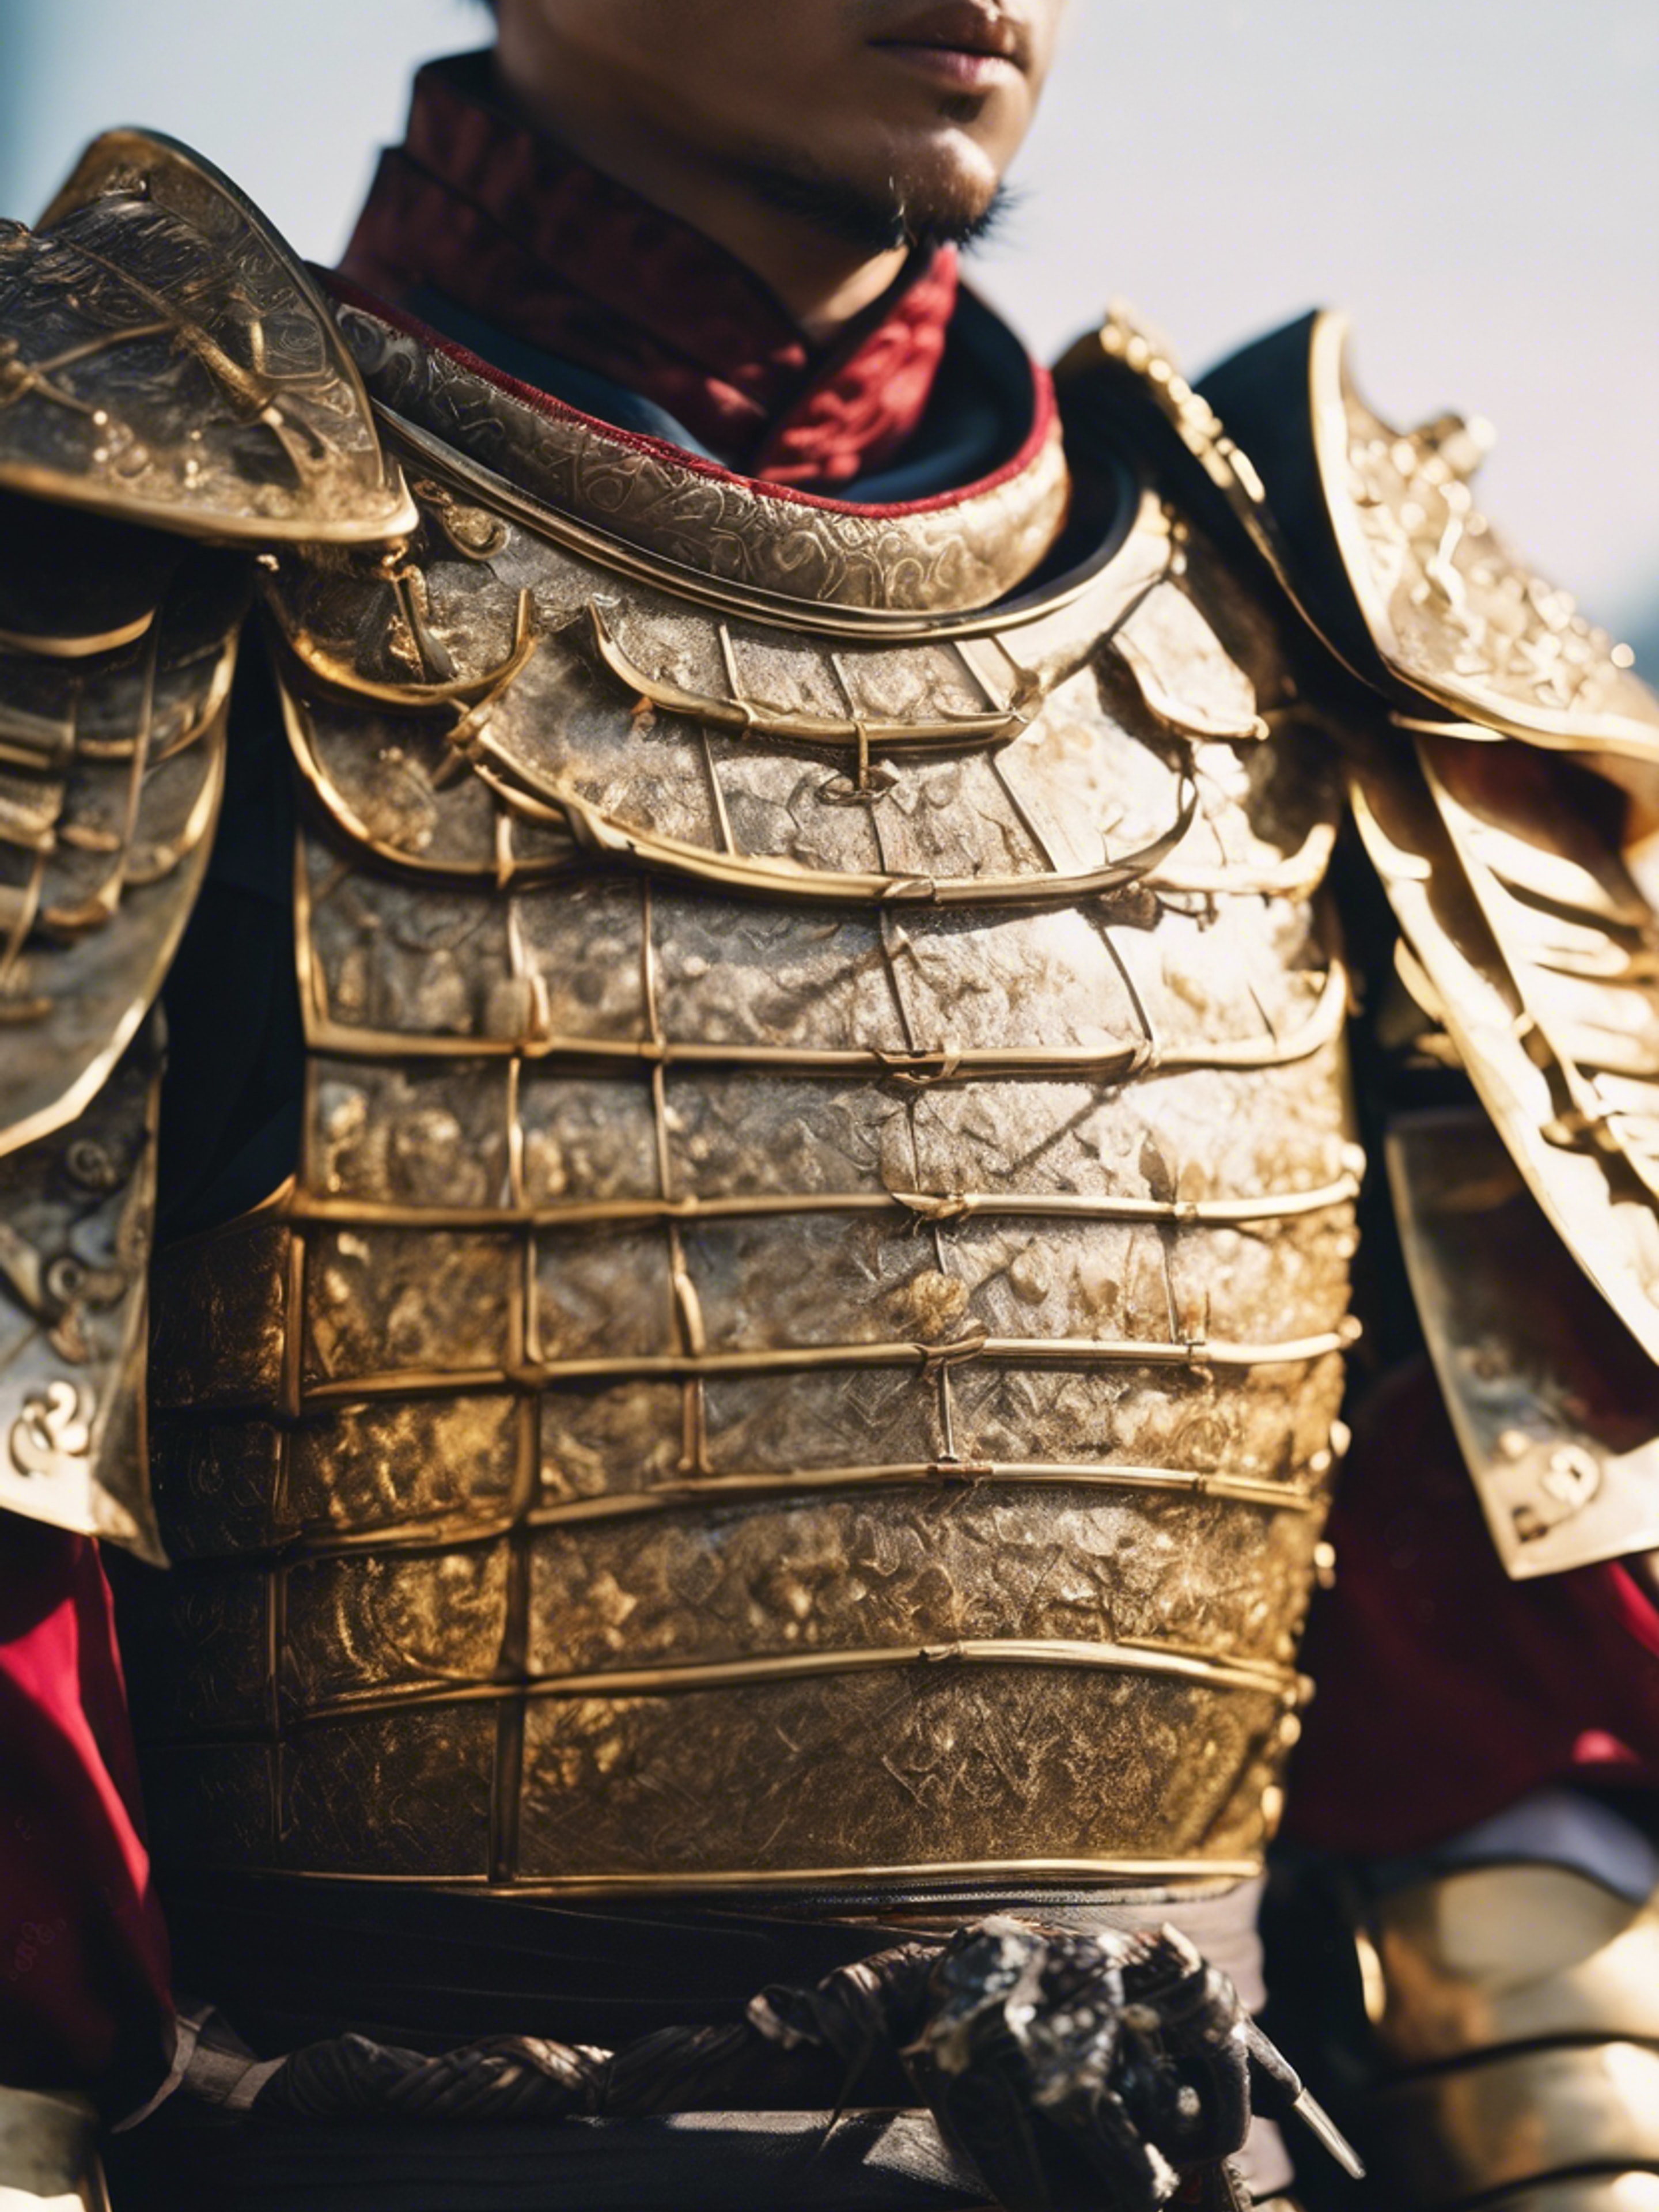 A close-up detail of a beautiful samurai armor glistening in the sunlight Tapeta[f86ed1772fa04d06b0b3]